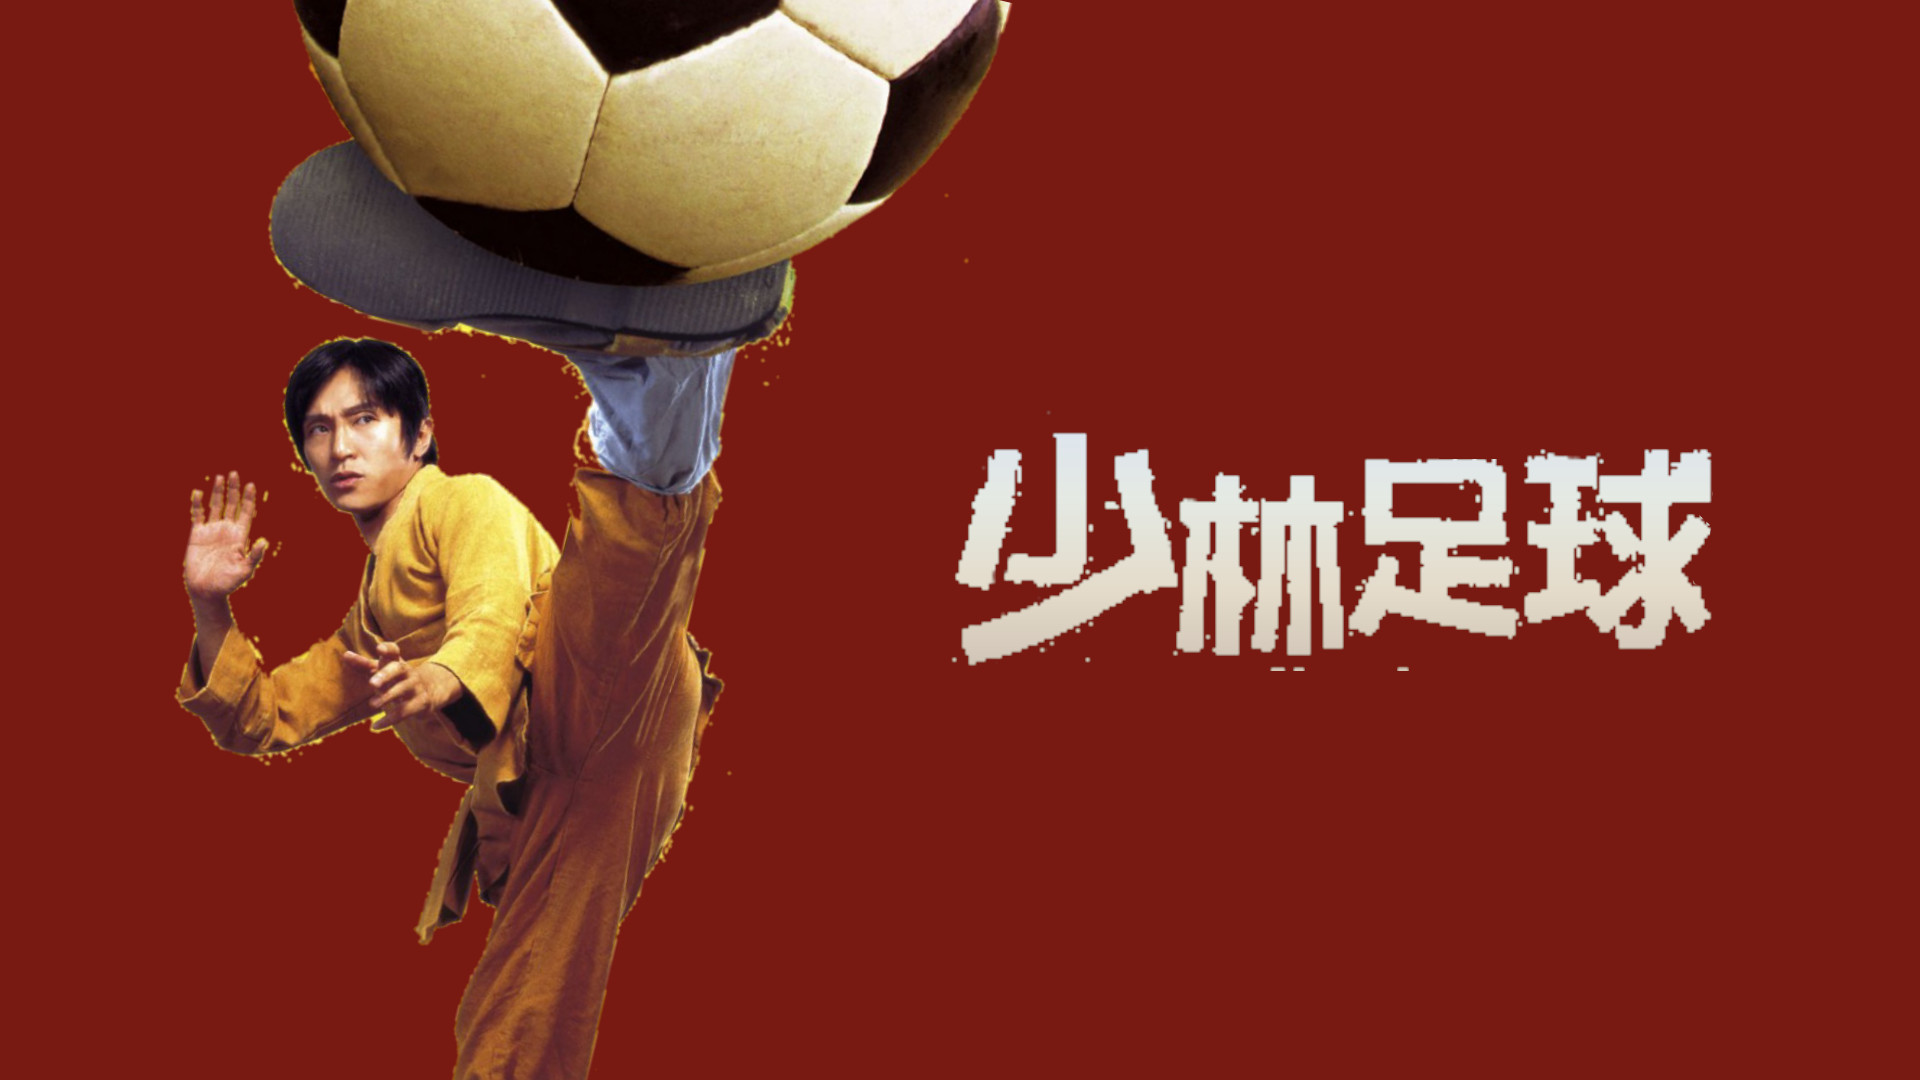 1920x1080 Shaolin Soccer (2001) Phone Wallpaper | Moviemania